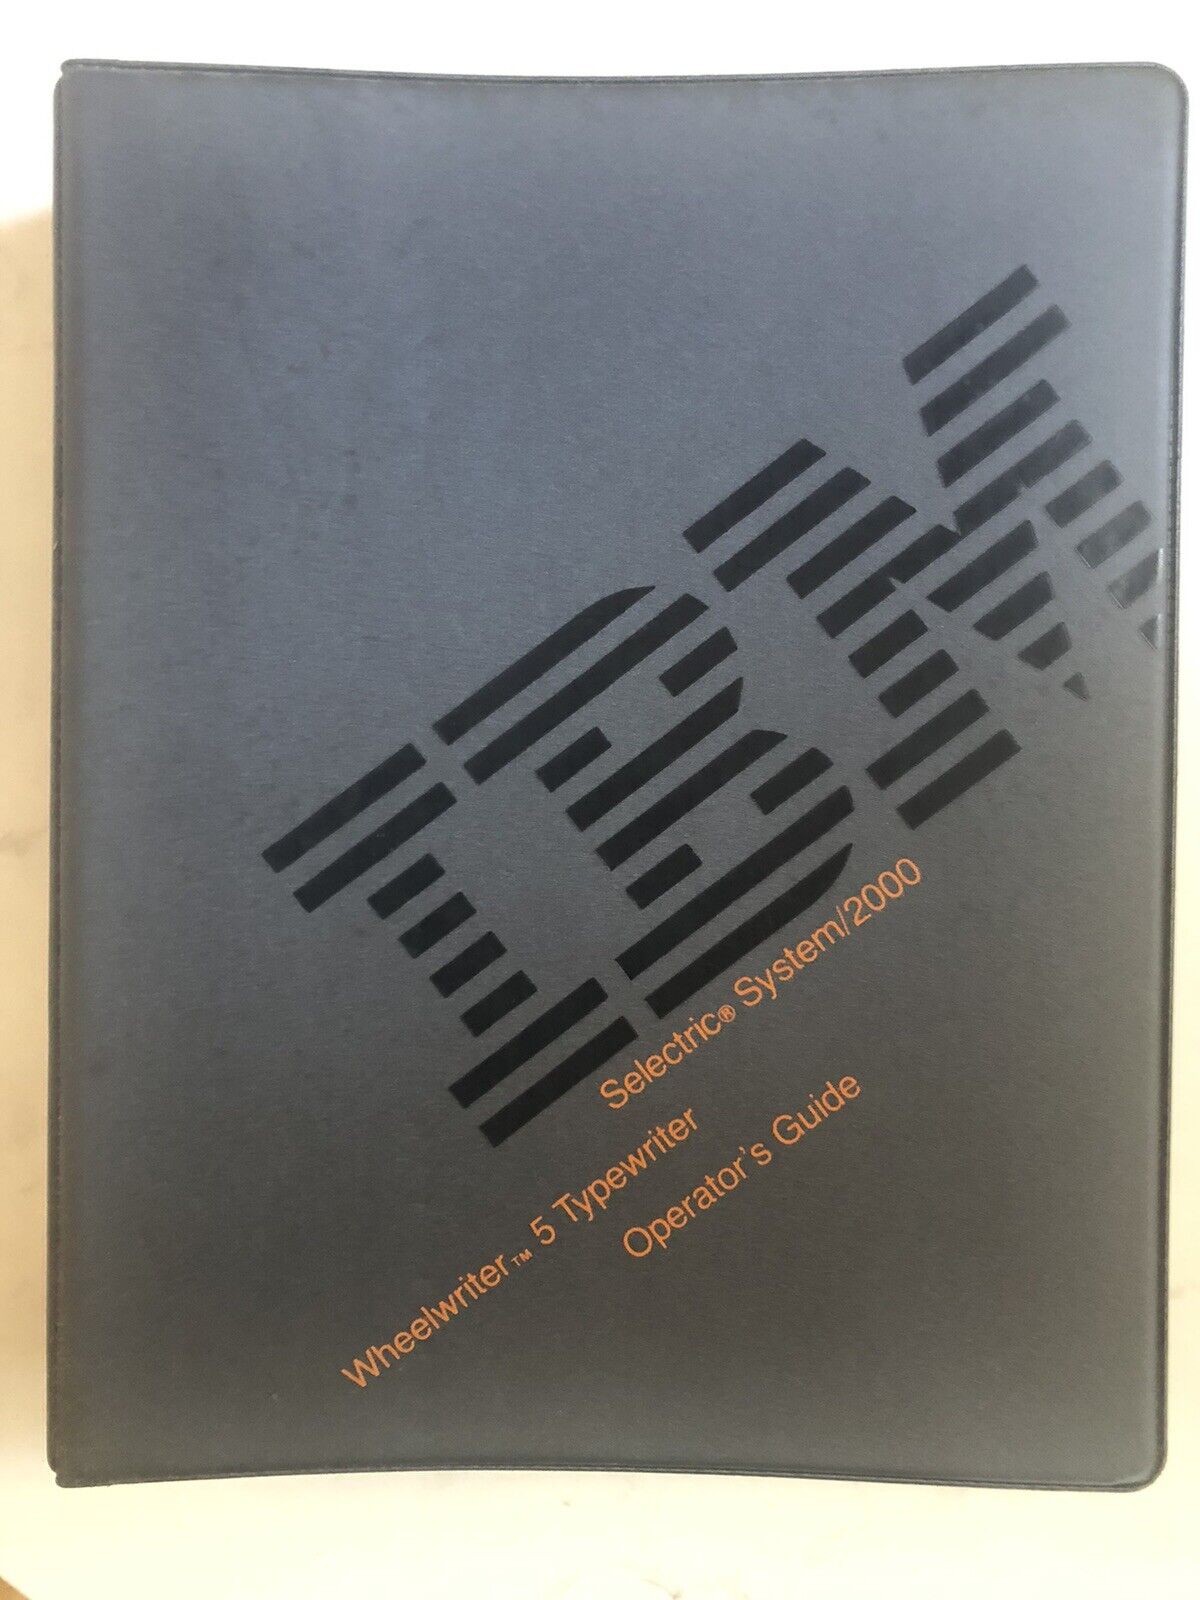 IBM Selectric System 2000 Operator’s Guide, 1984. Binder firmat